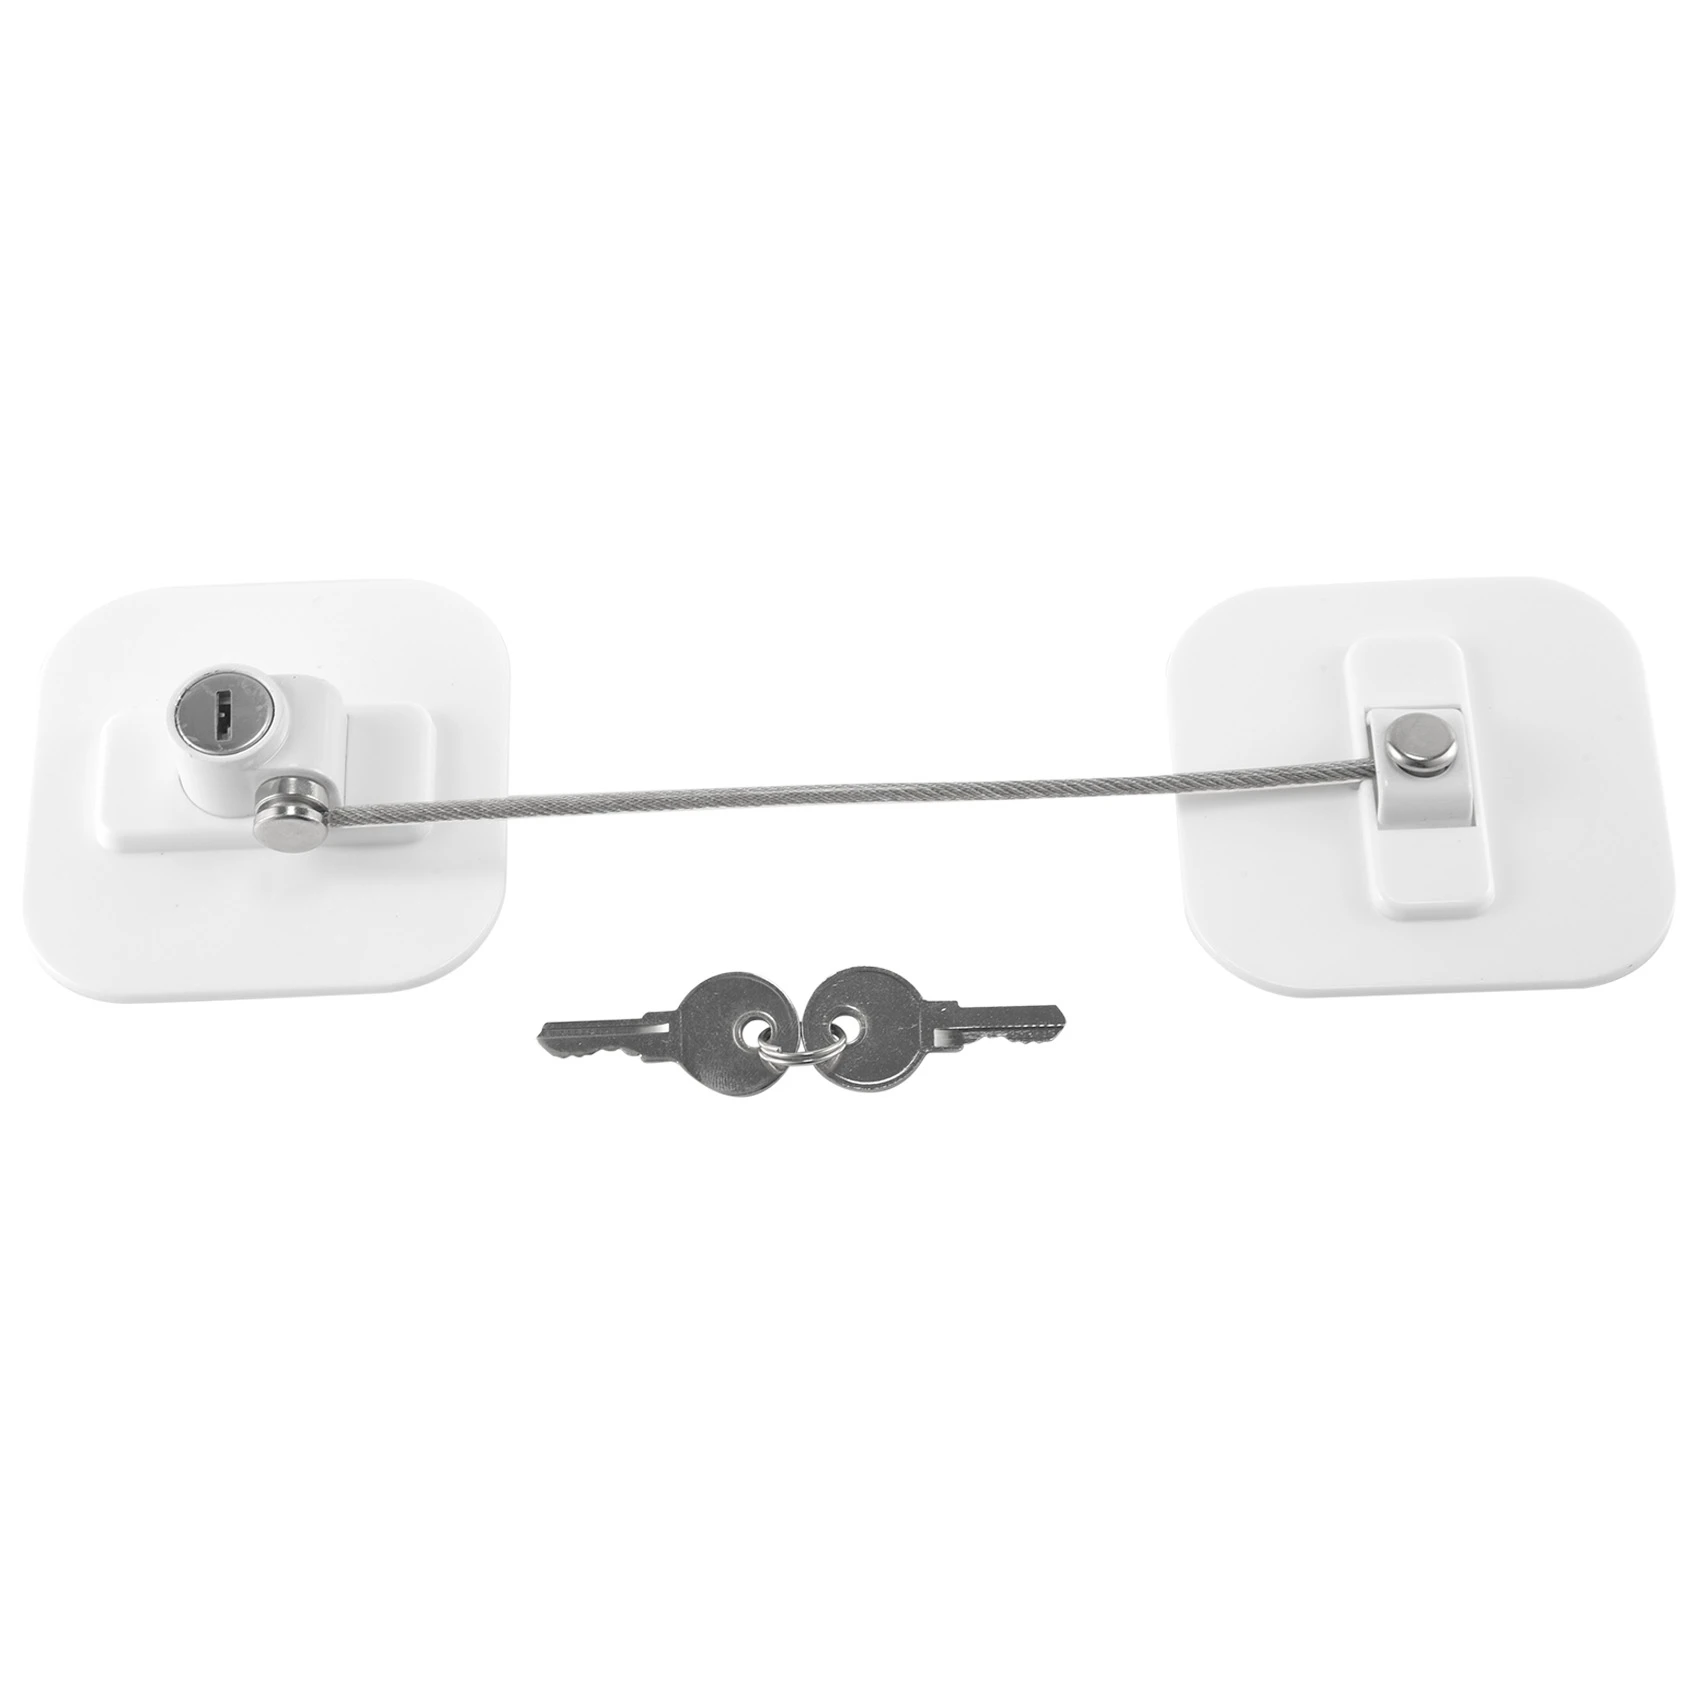 Fridge Lock Refrigerator Locks Freezer Lock With Key For Child Safety Locks  To Lock Fridge And Cabinets (white Fridge Lock-1pack)